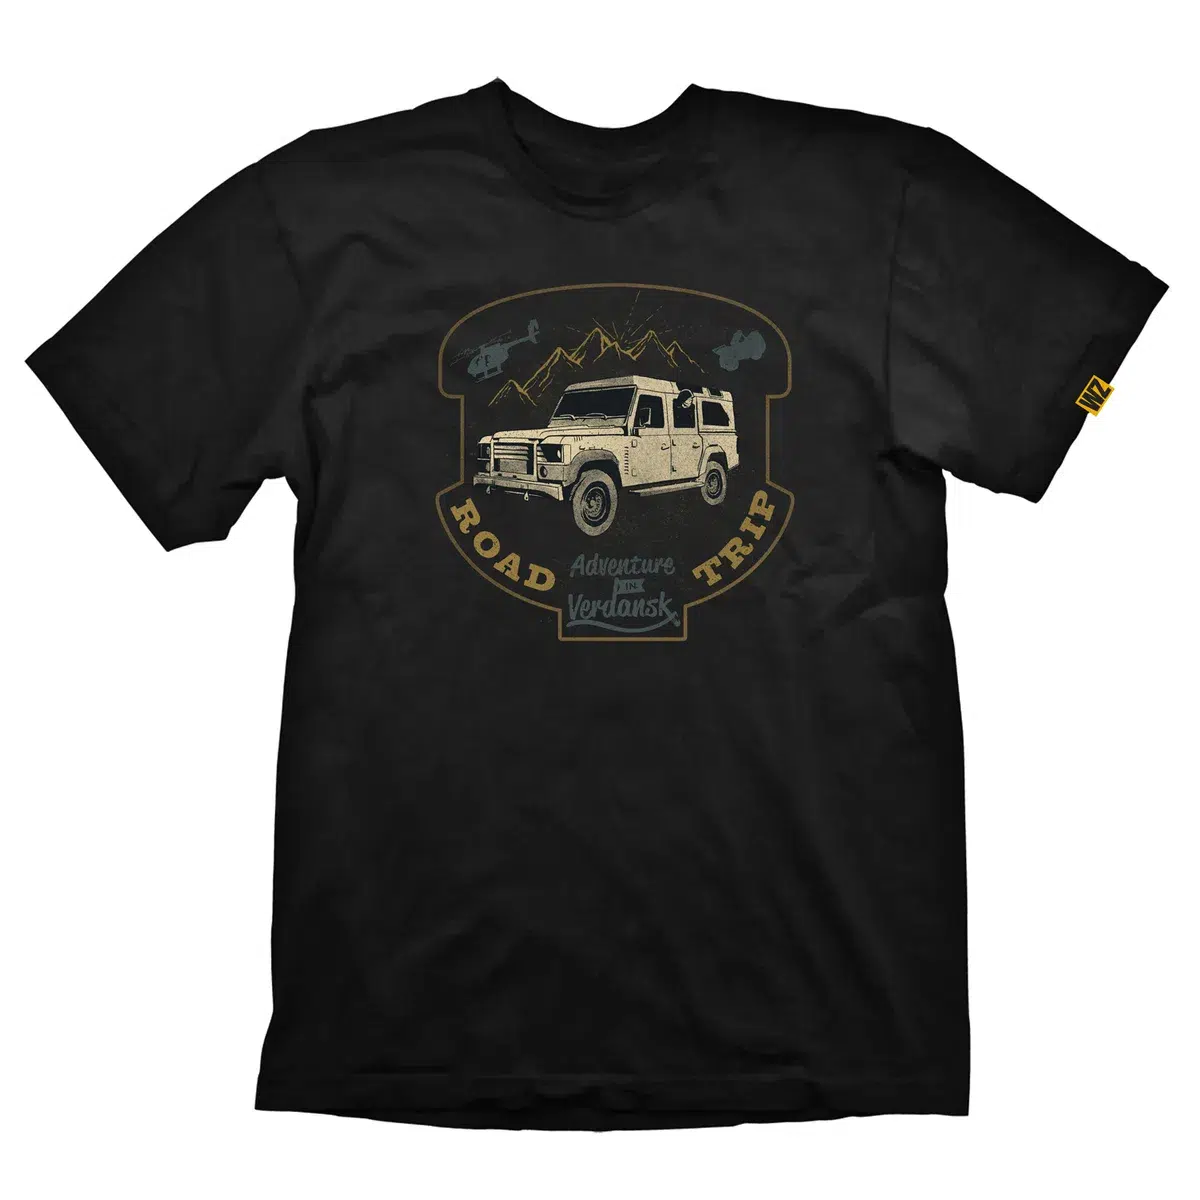 Call of Duty: WarzoneT-Shirt "Road Trip" Black S